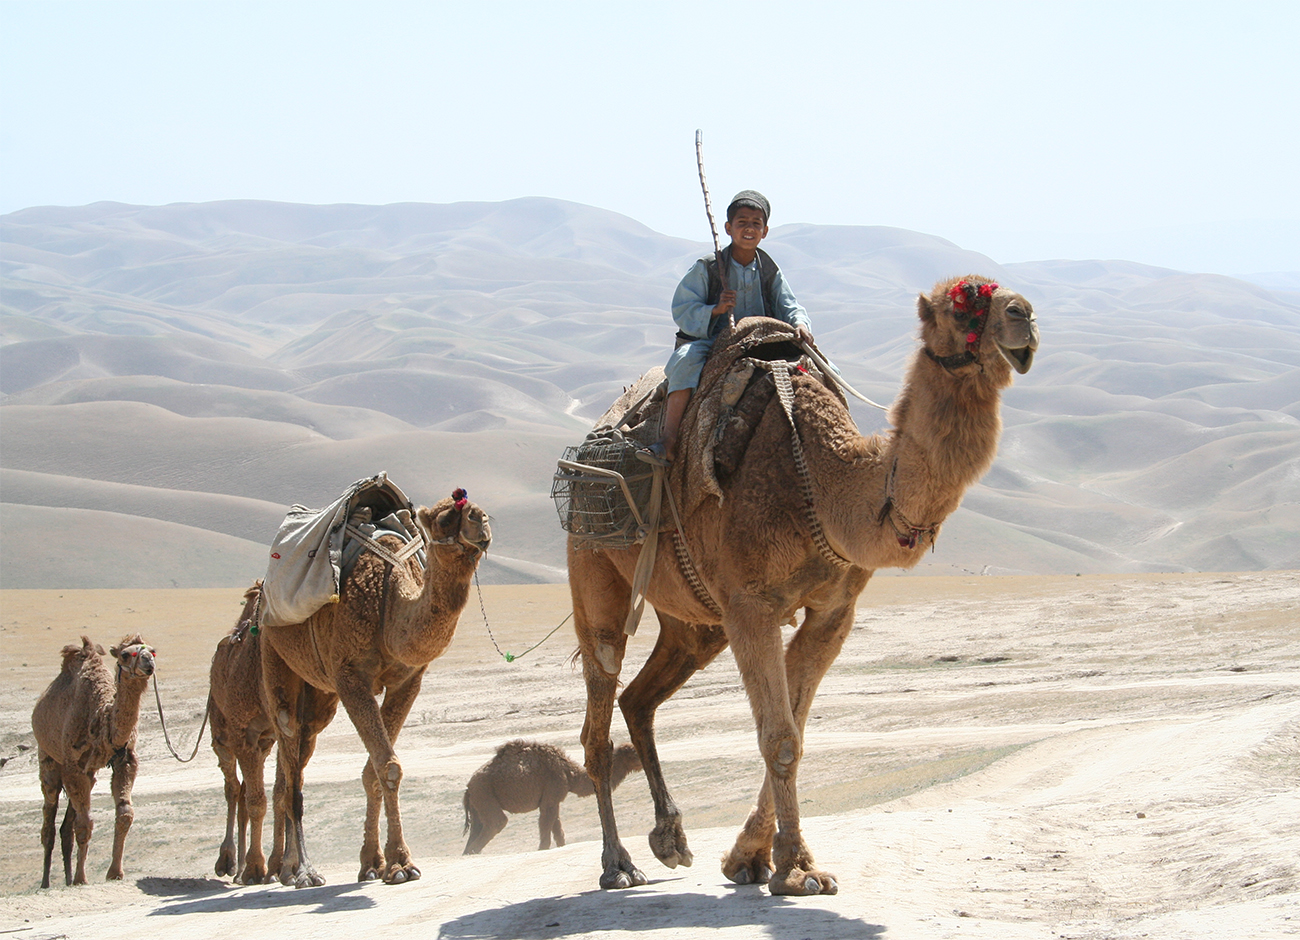 A Kuchi boy rides a camel through rural Afghanistan.